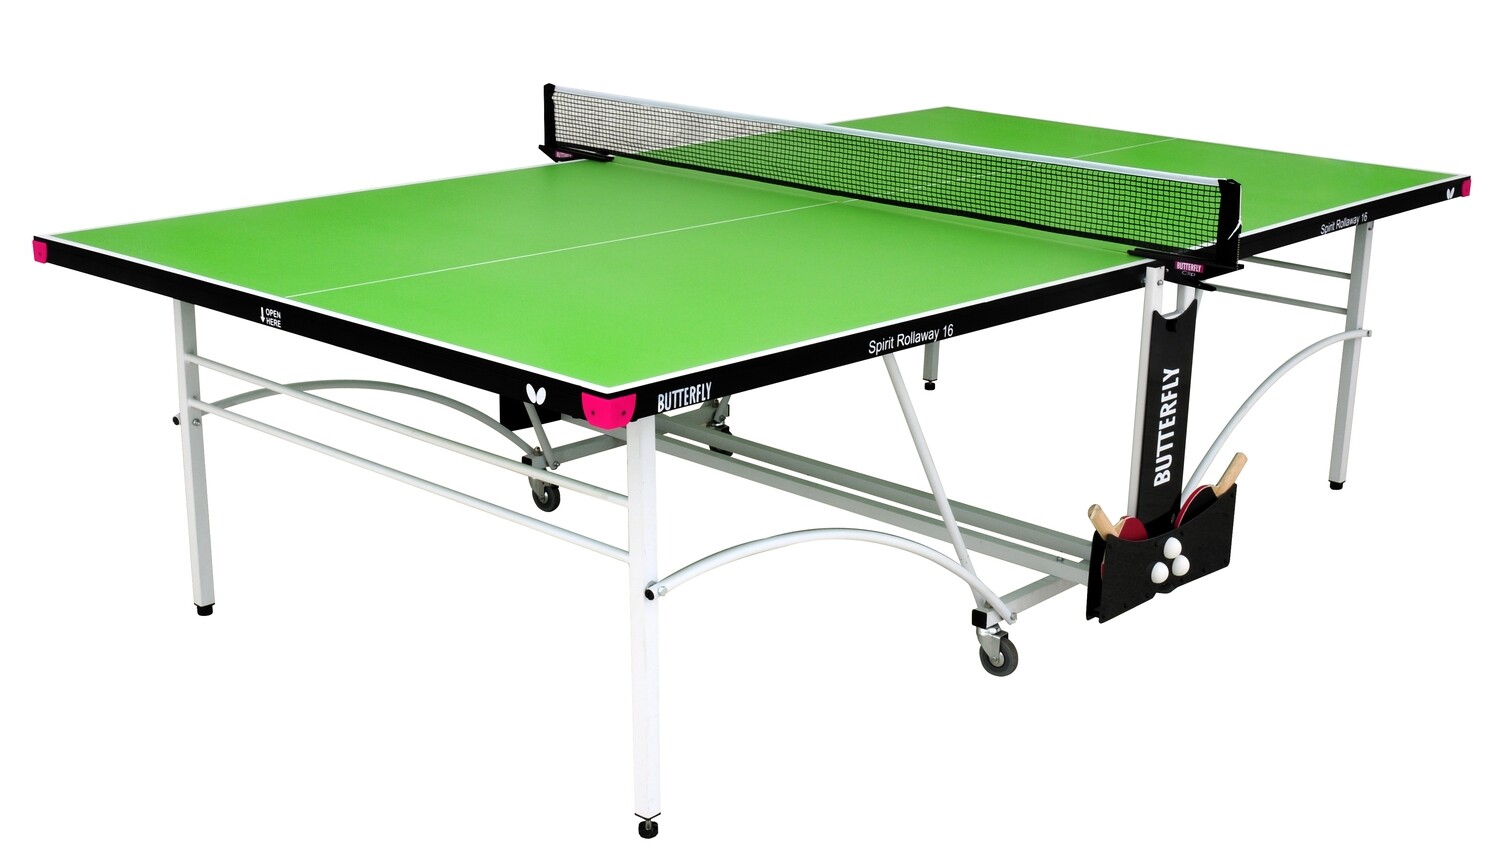 Butterfly Spirit 16 Indoor Rollaway Table Tennis Table